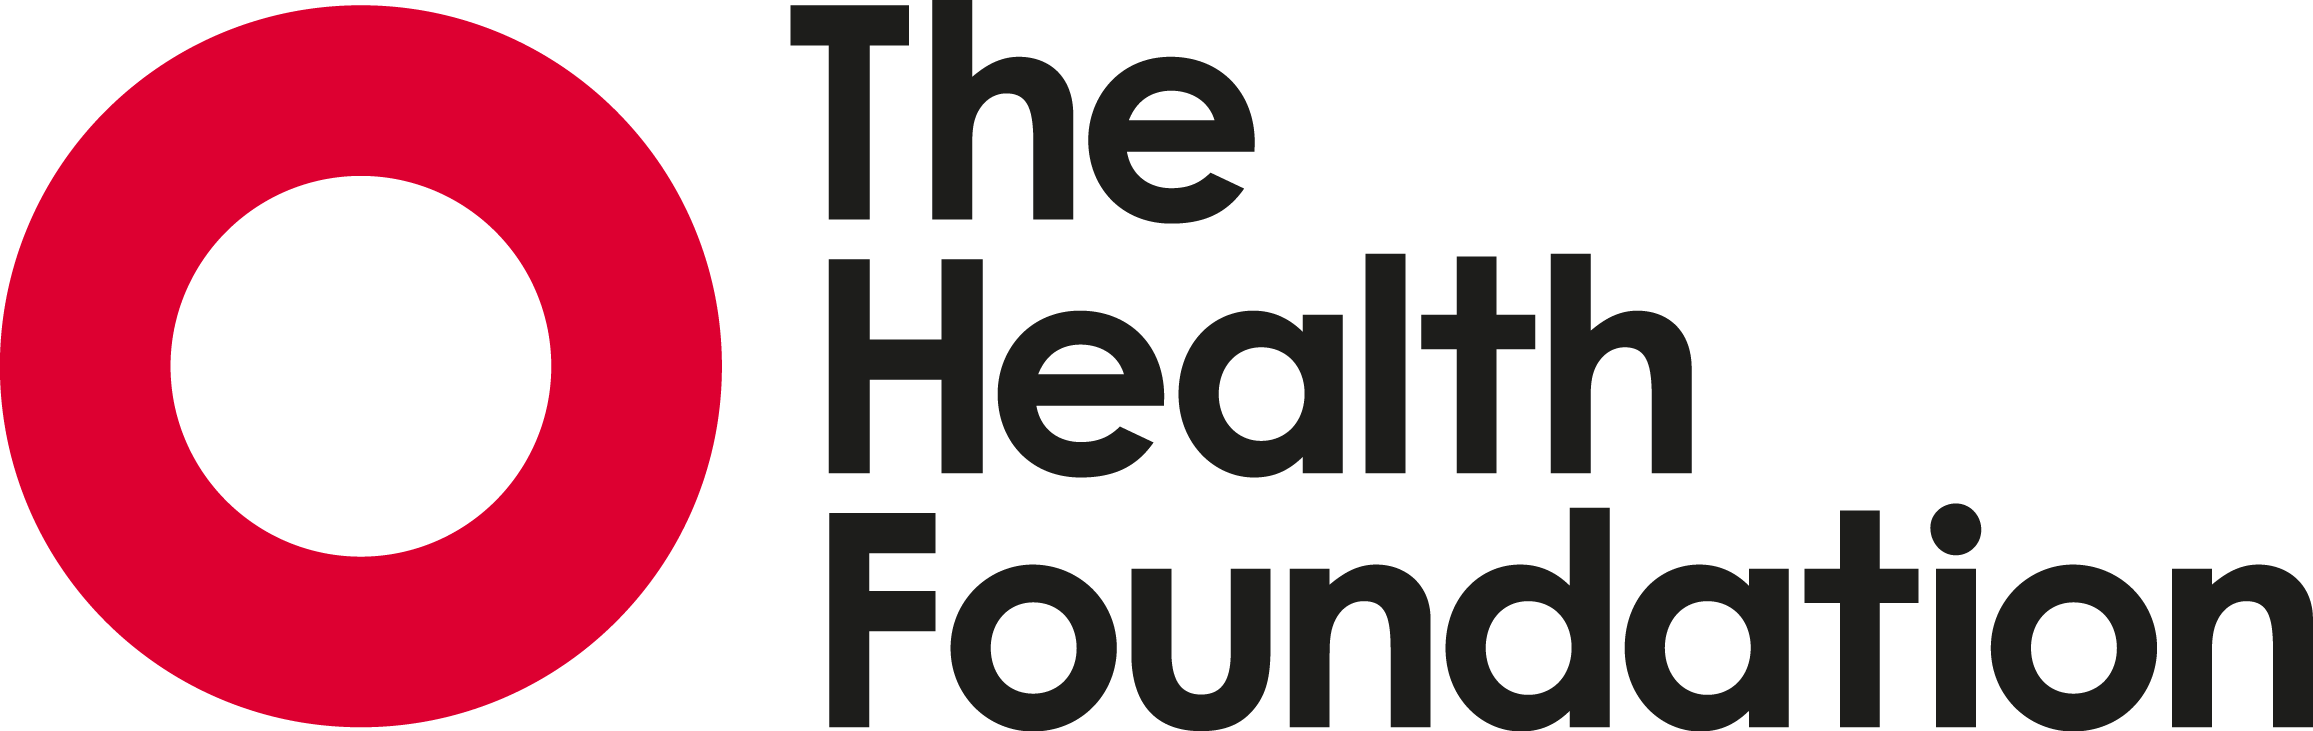 health-foundation-logo.png